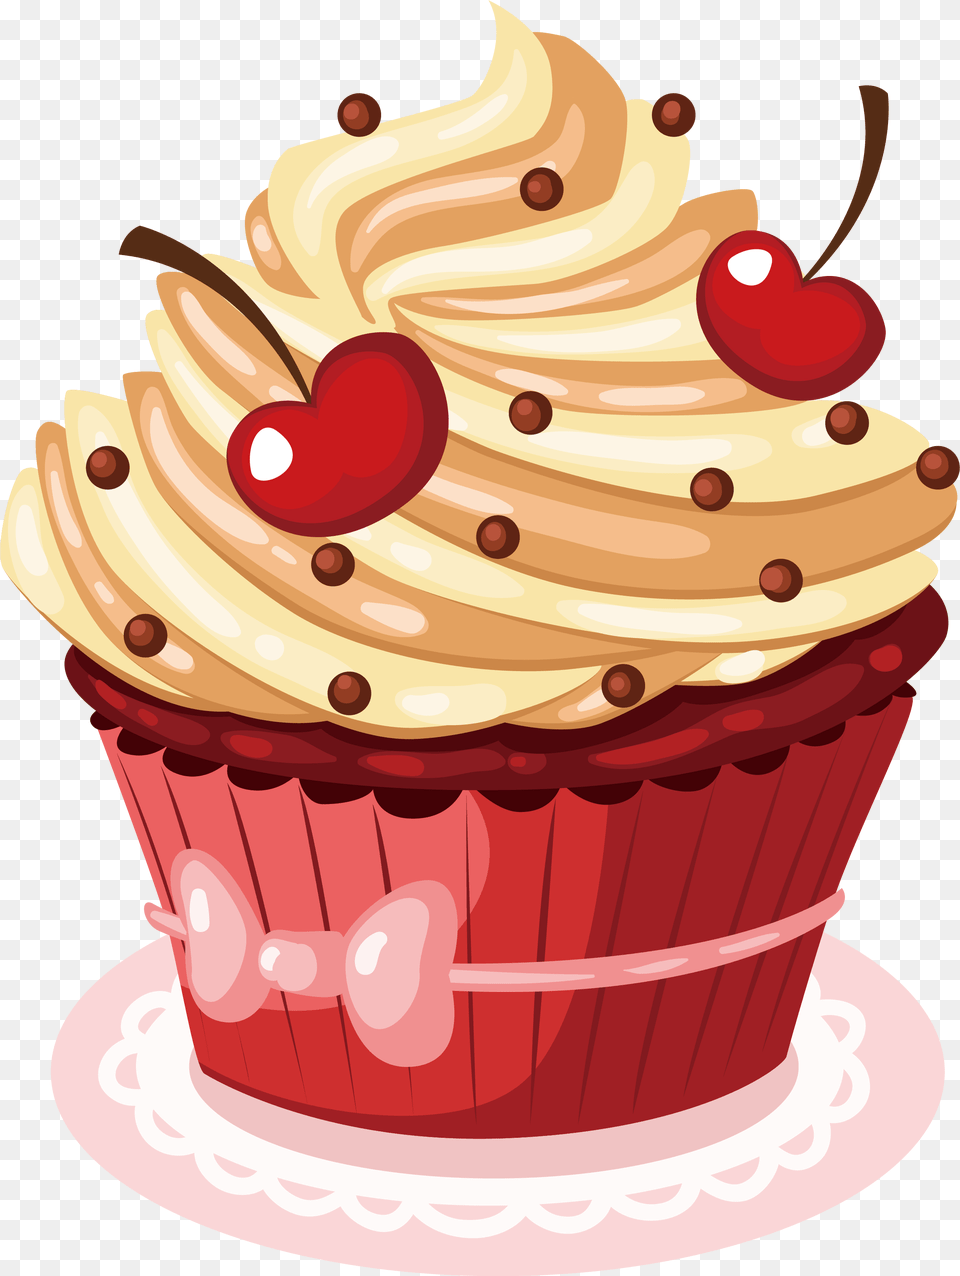 Happy Birthday To You Wish Greeting Card Desenho De Cupcake Colorido, Birthday Cake, Cake, Cream, Dessert Png